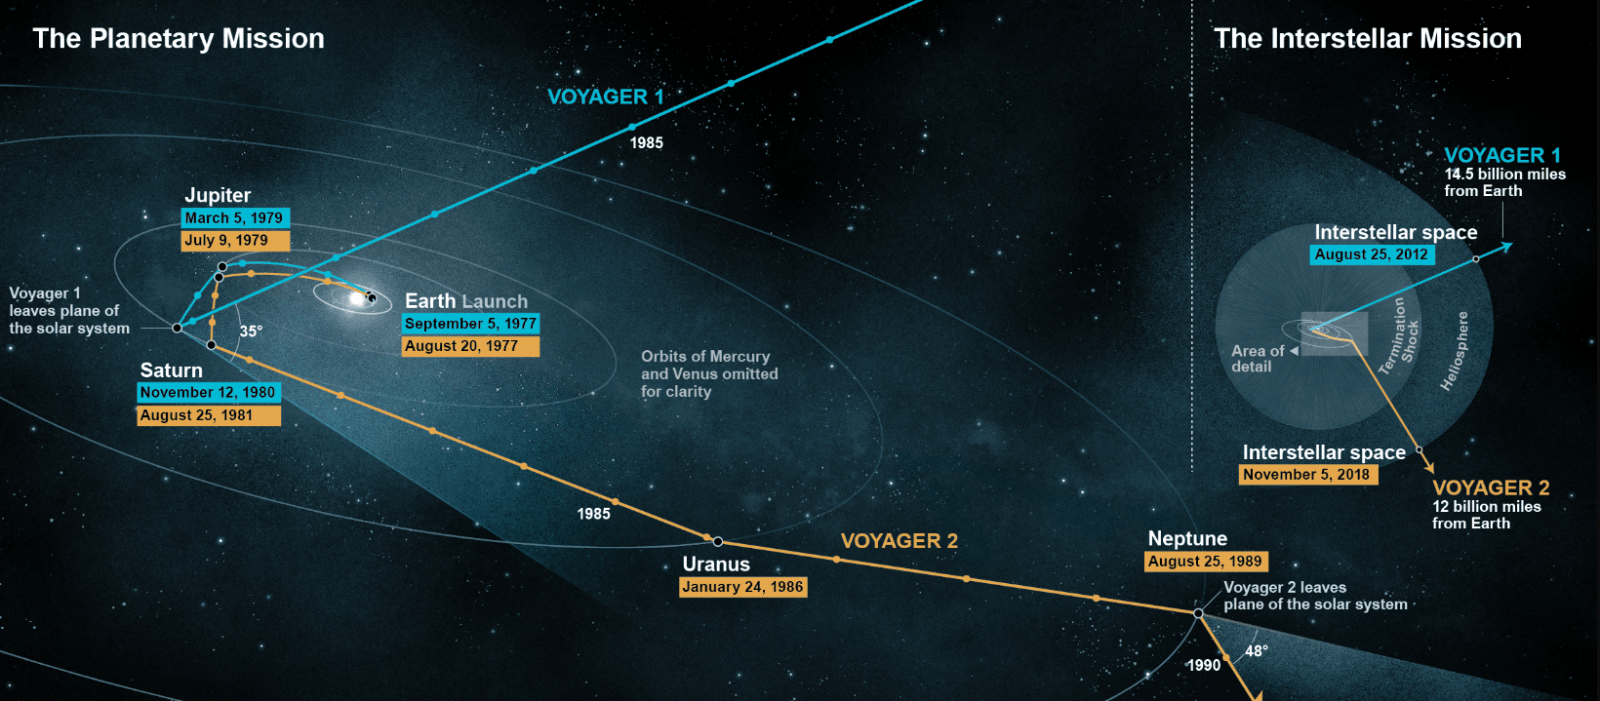 Image of Voyager 2 spacecraft: "Voyager 2 - NASA's Longest-running Space Probe" 